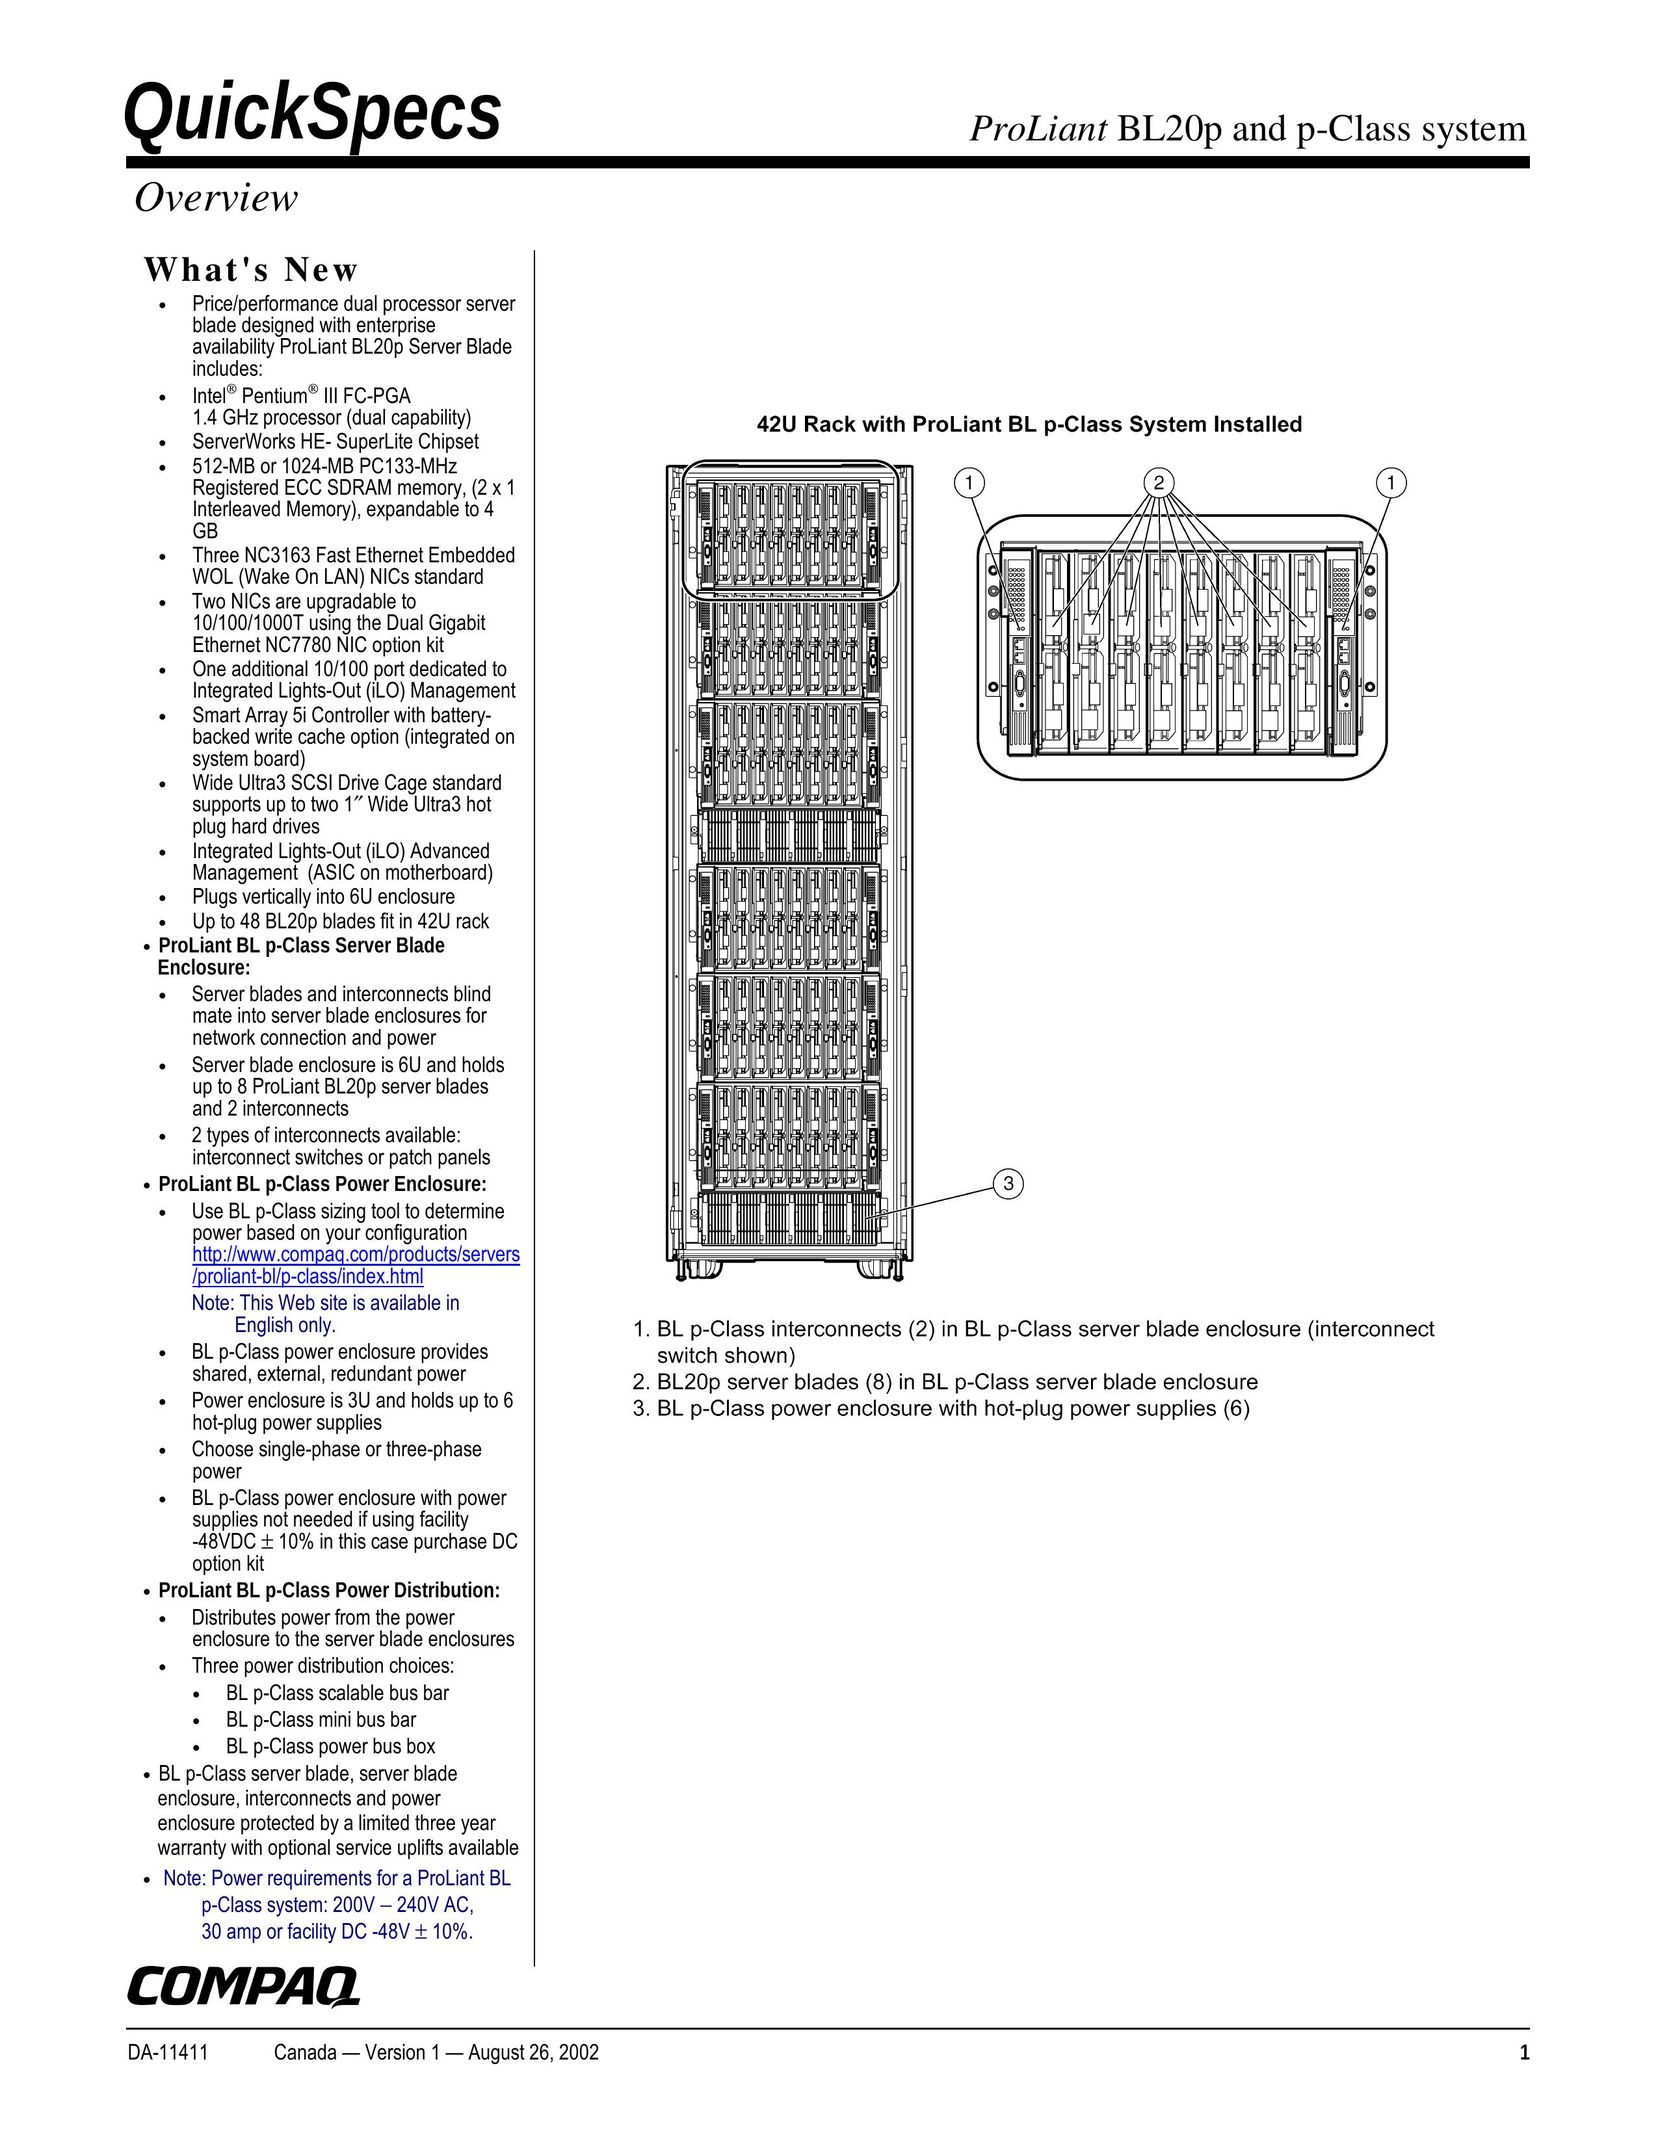 Compaq p-Class Computer Hardware User Manual